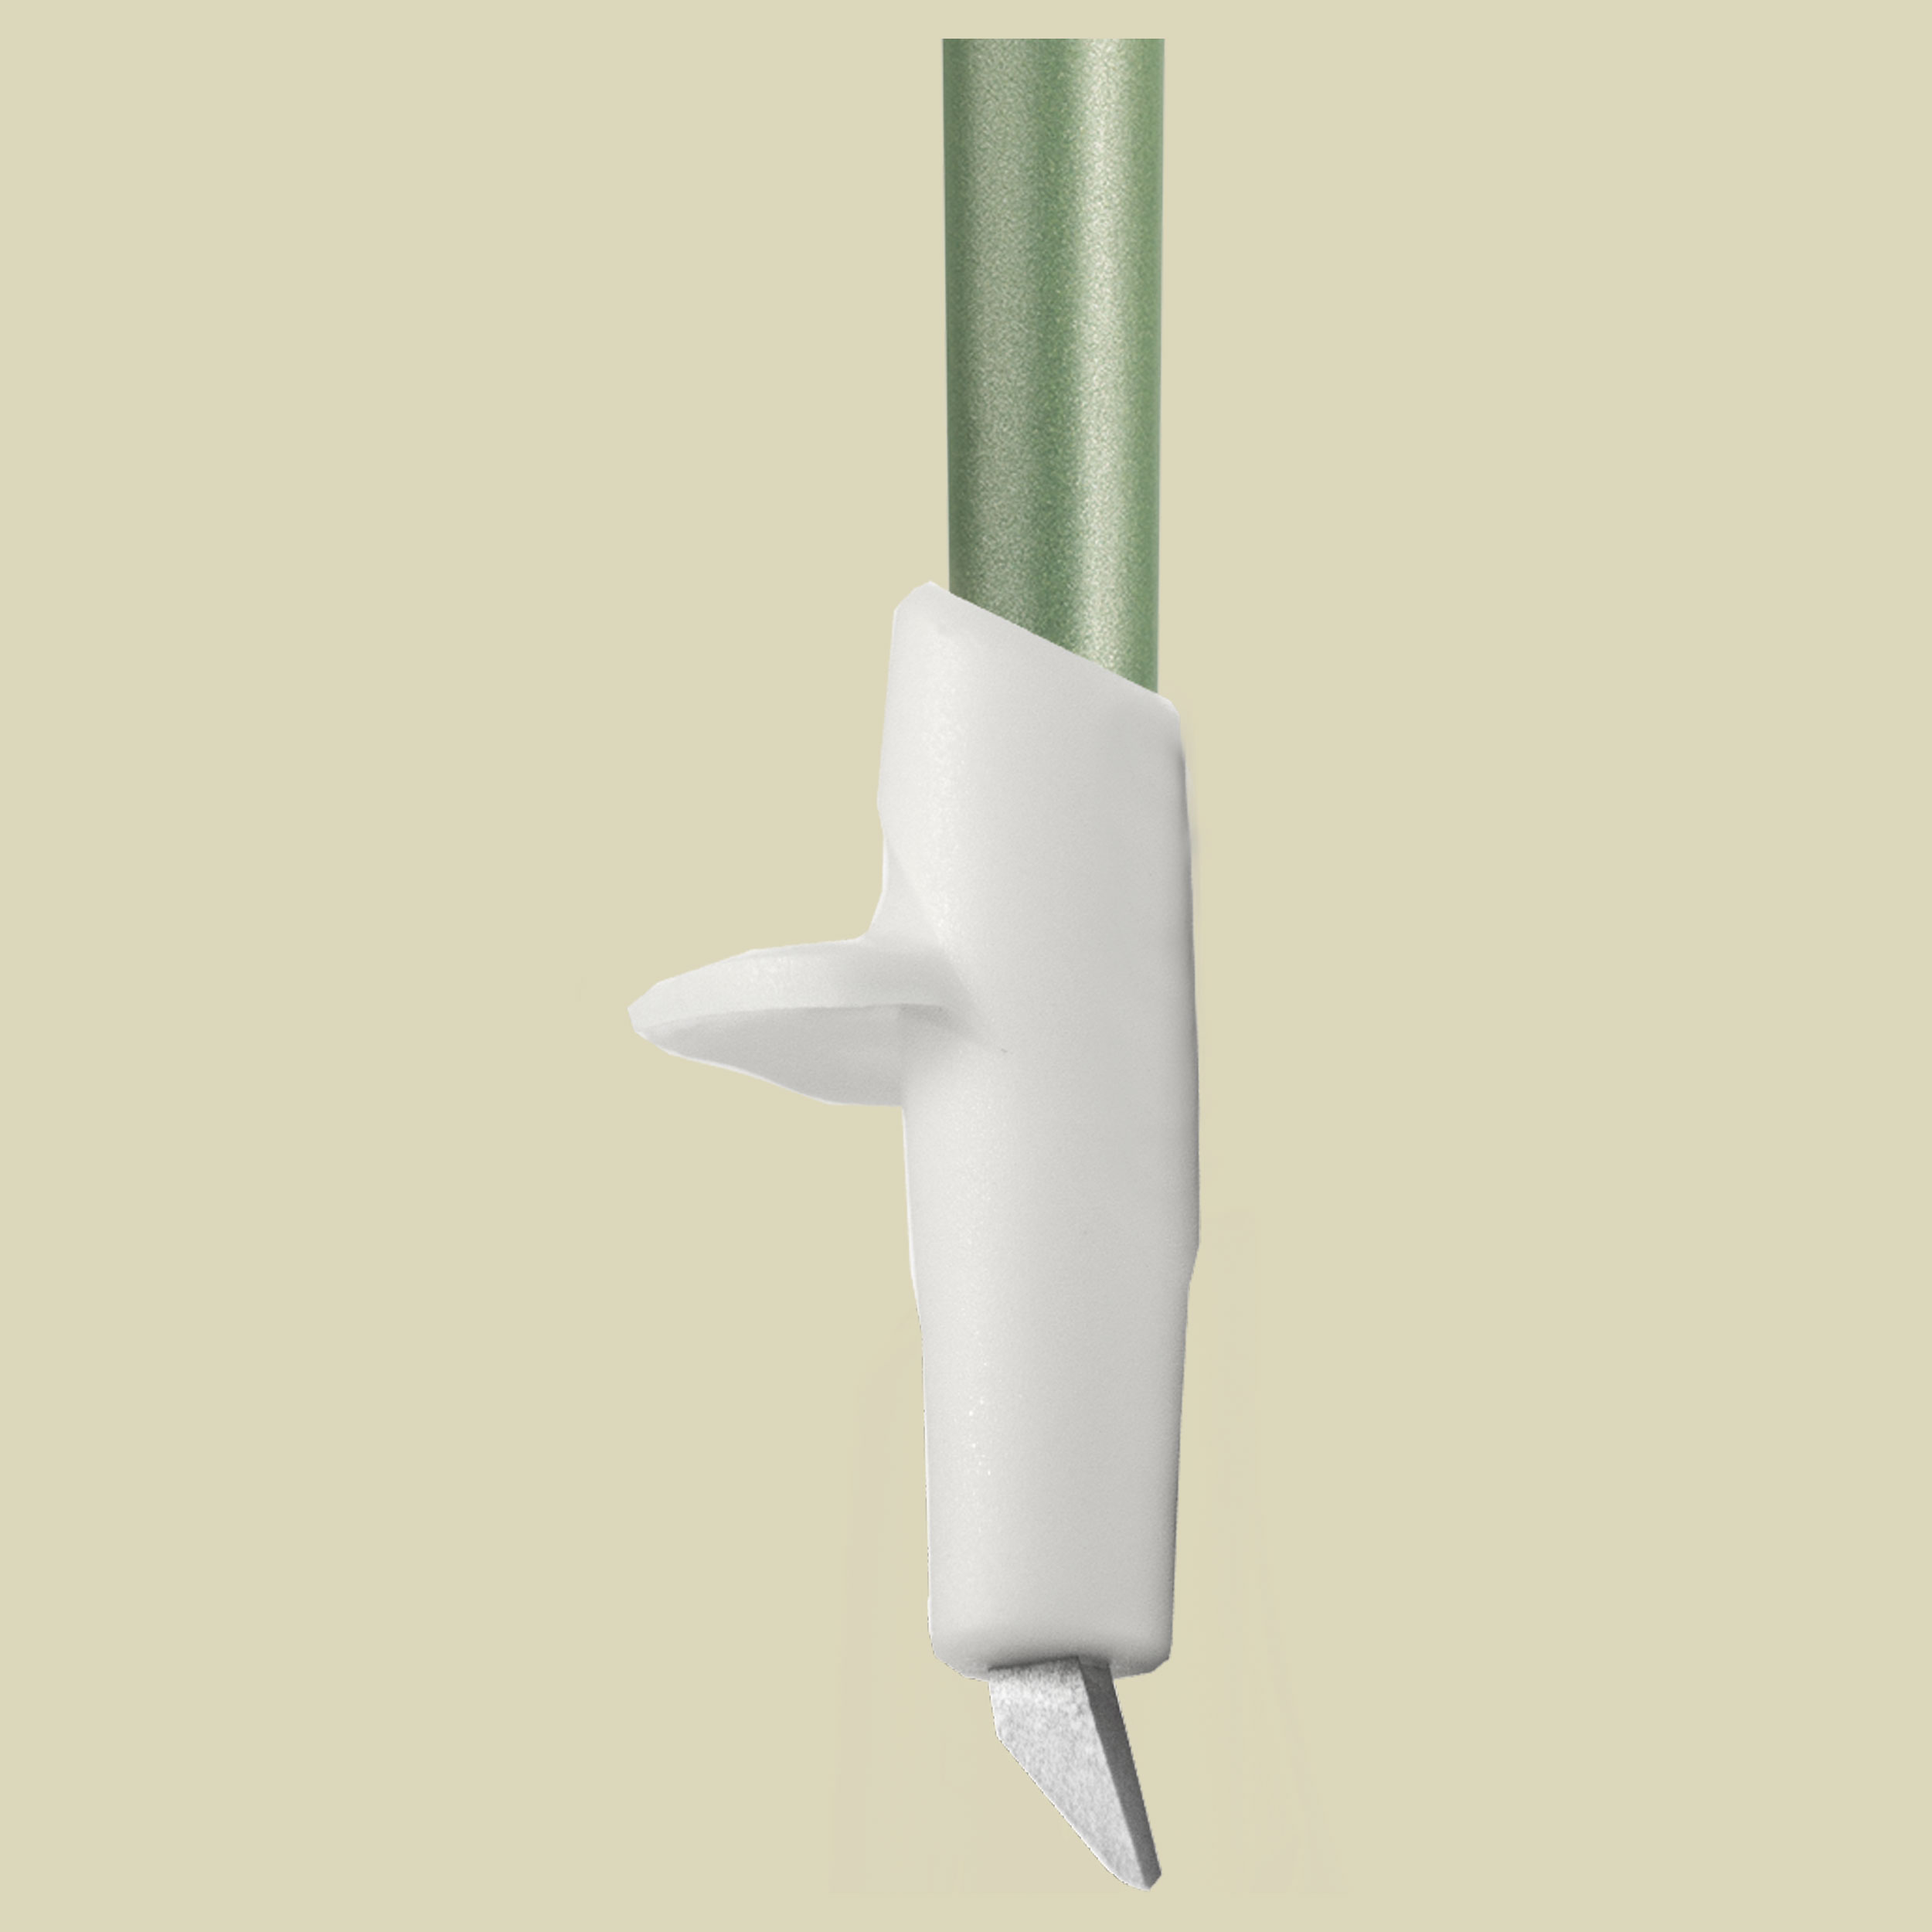 Passion Länge 110 cm Farbe smokegreen-white-dark anthracite